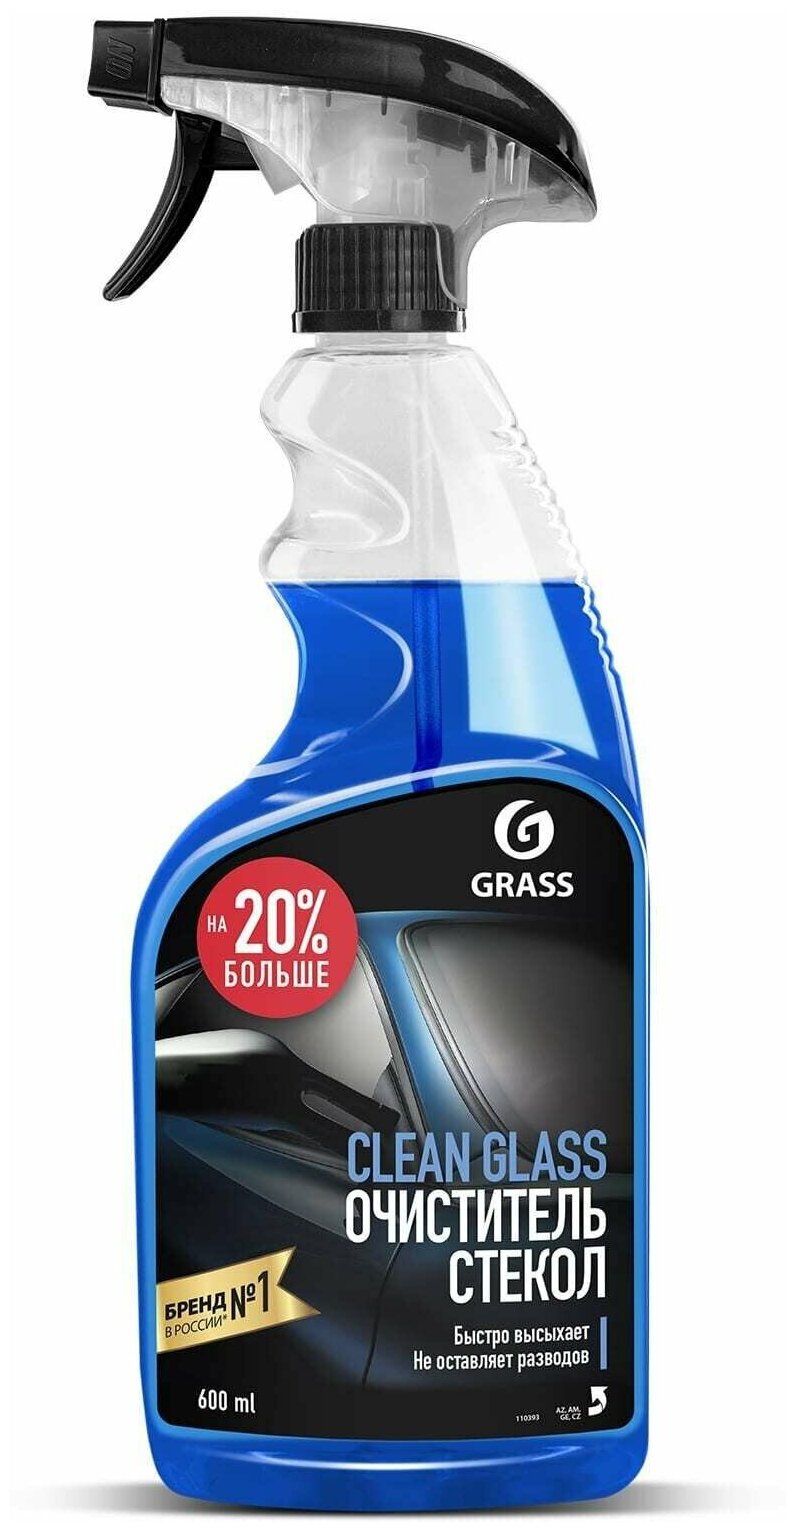 Очиститель стекол и зеркал GRASS Clean glass 600мл триггер